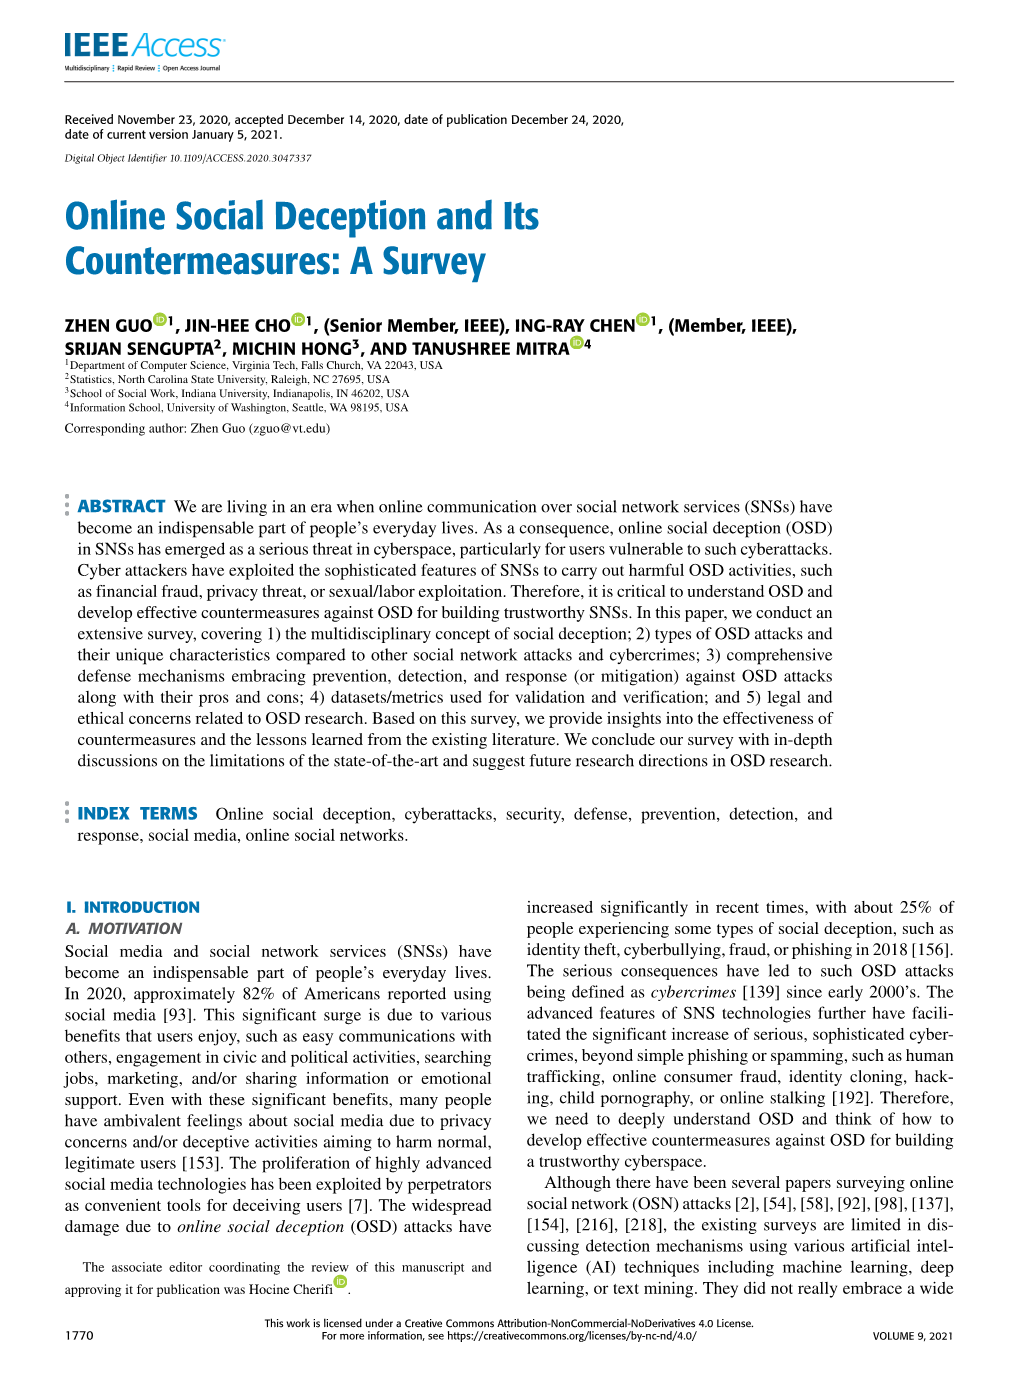 Online Social Deception and Its Countermeasures: a Survey